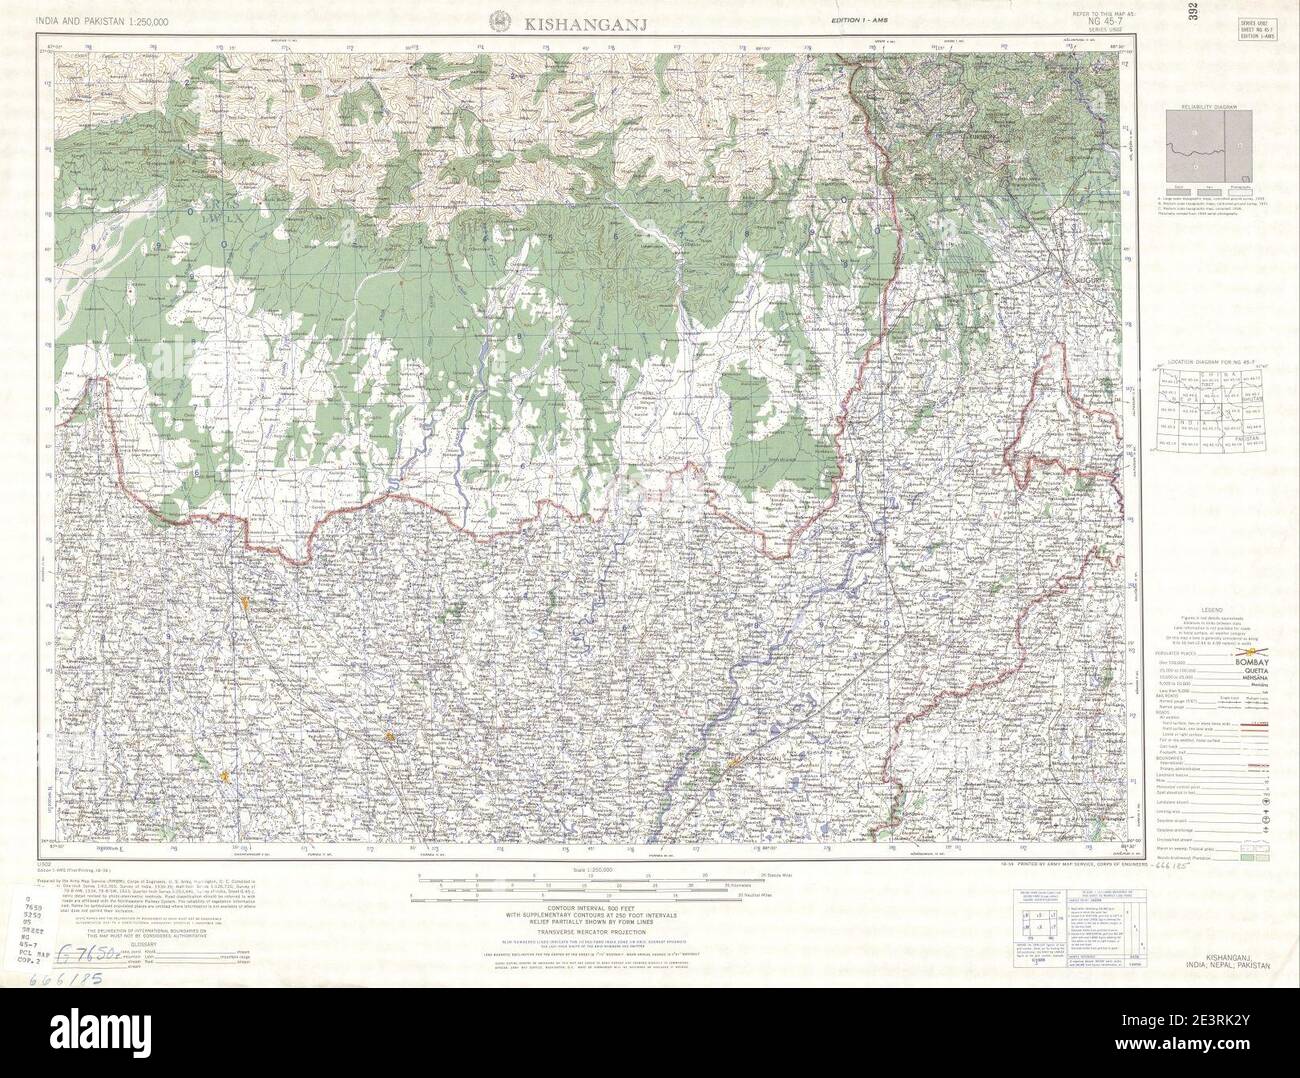 Map India and Pakistan 1-250,000 Tile NG 45-7 Kishanganj. Stock Photo